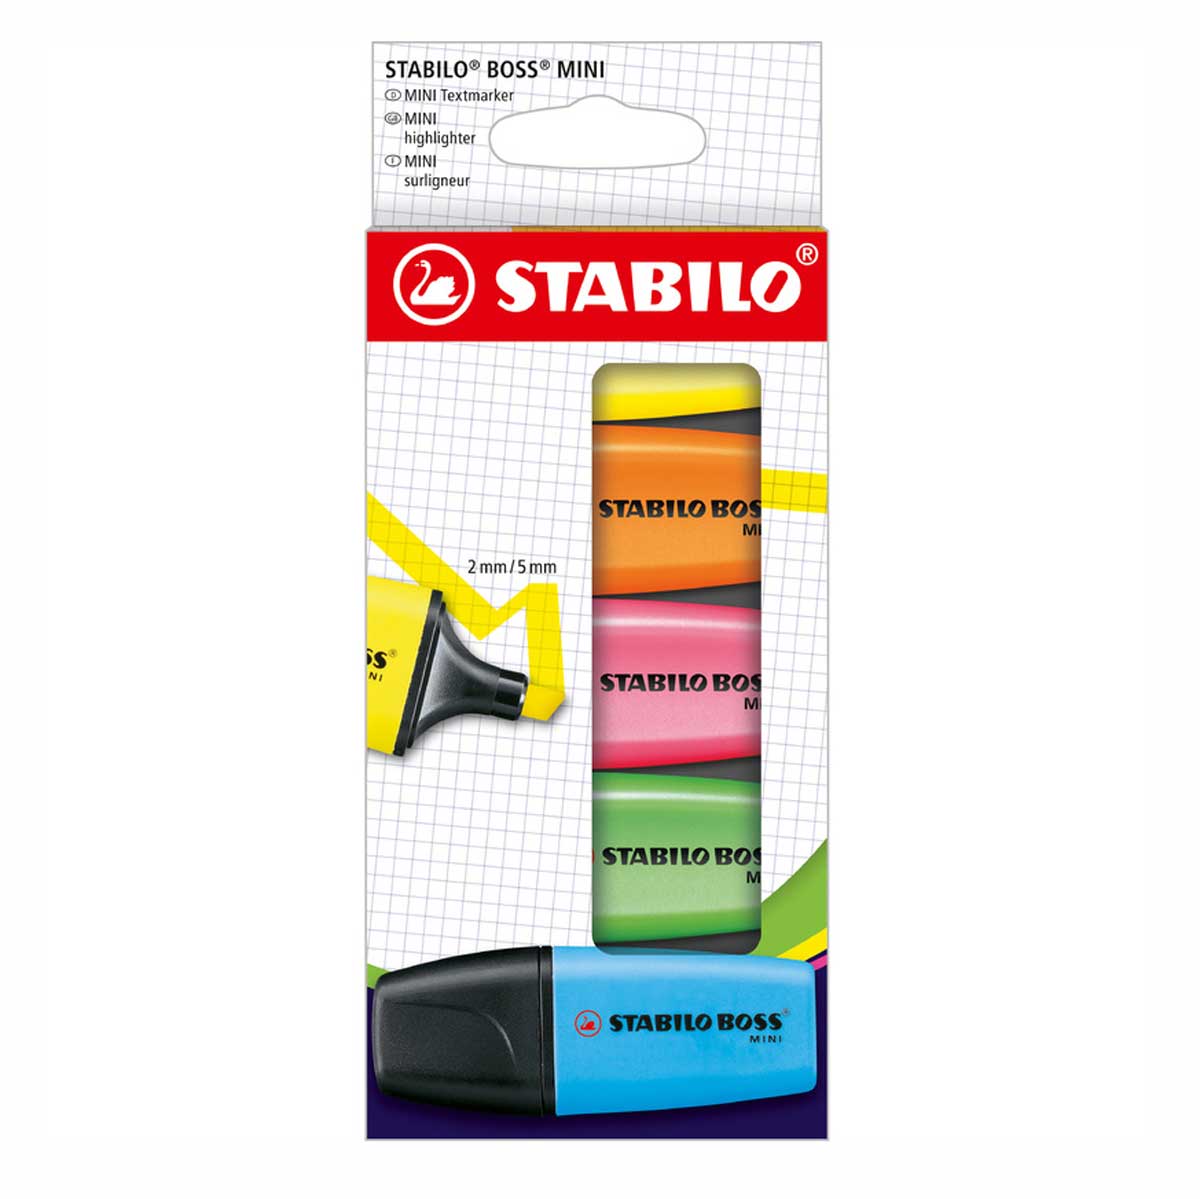 Textmarker STABILO BOSS MINI 5er Karton 1 | Bewertungen von Italiano Bello